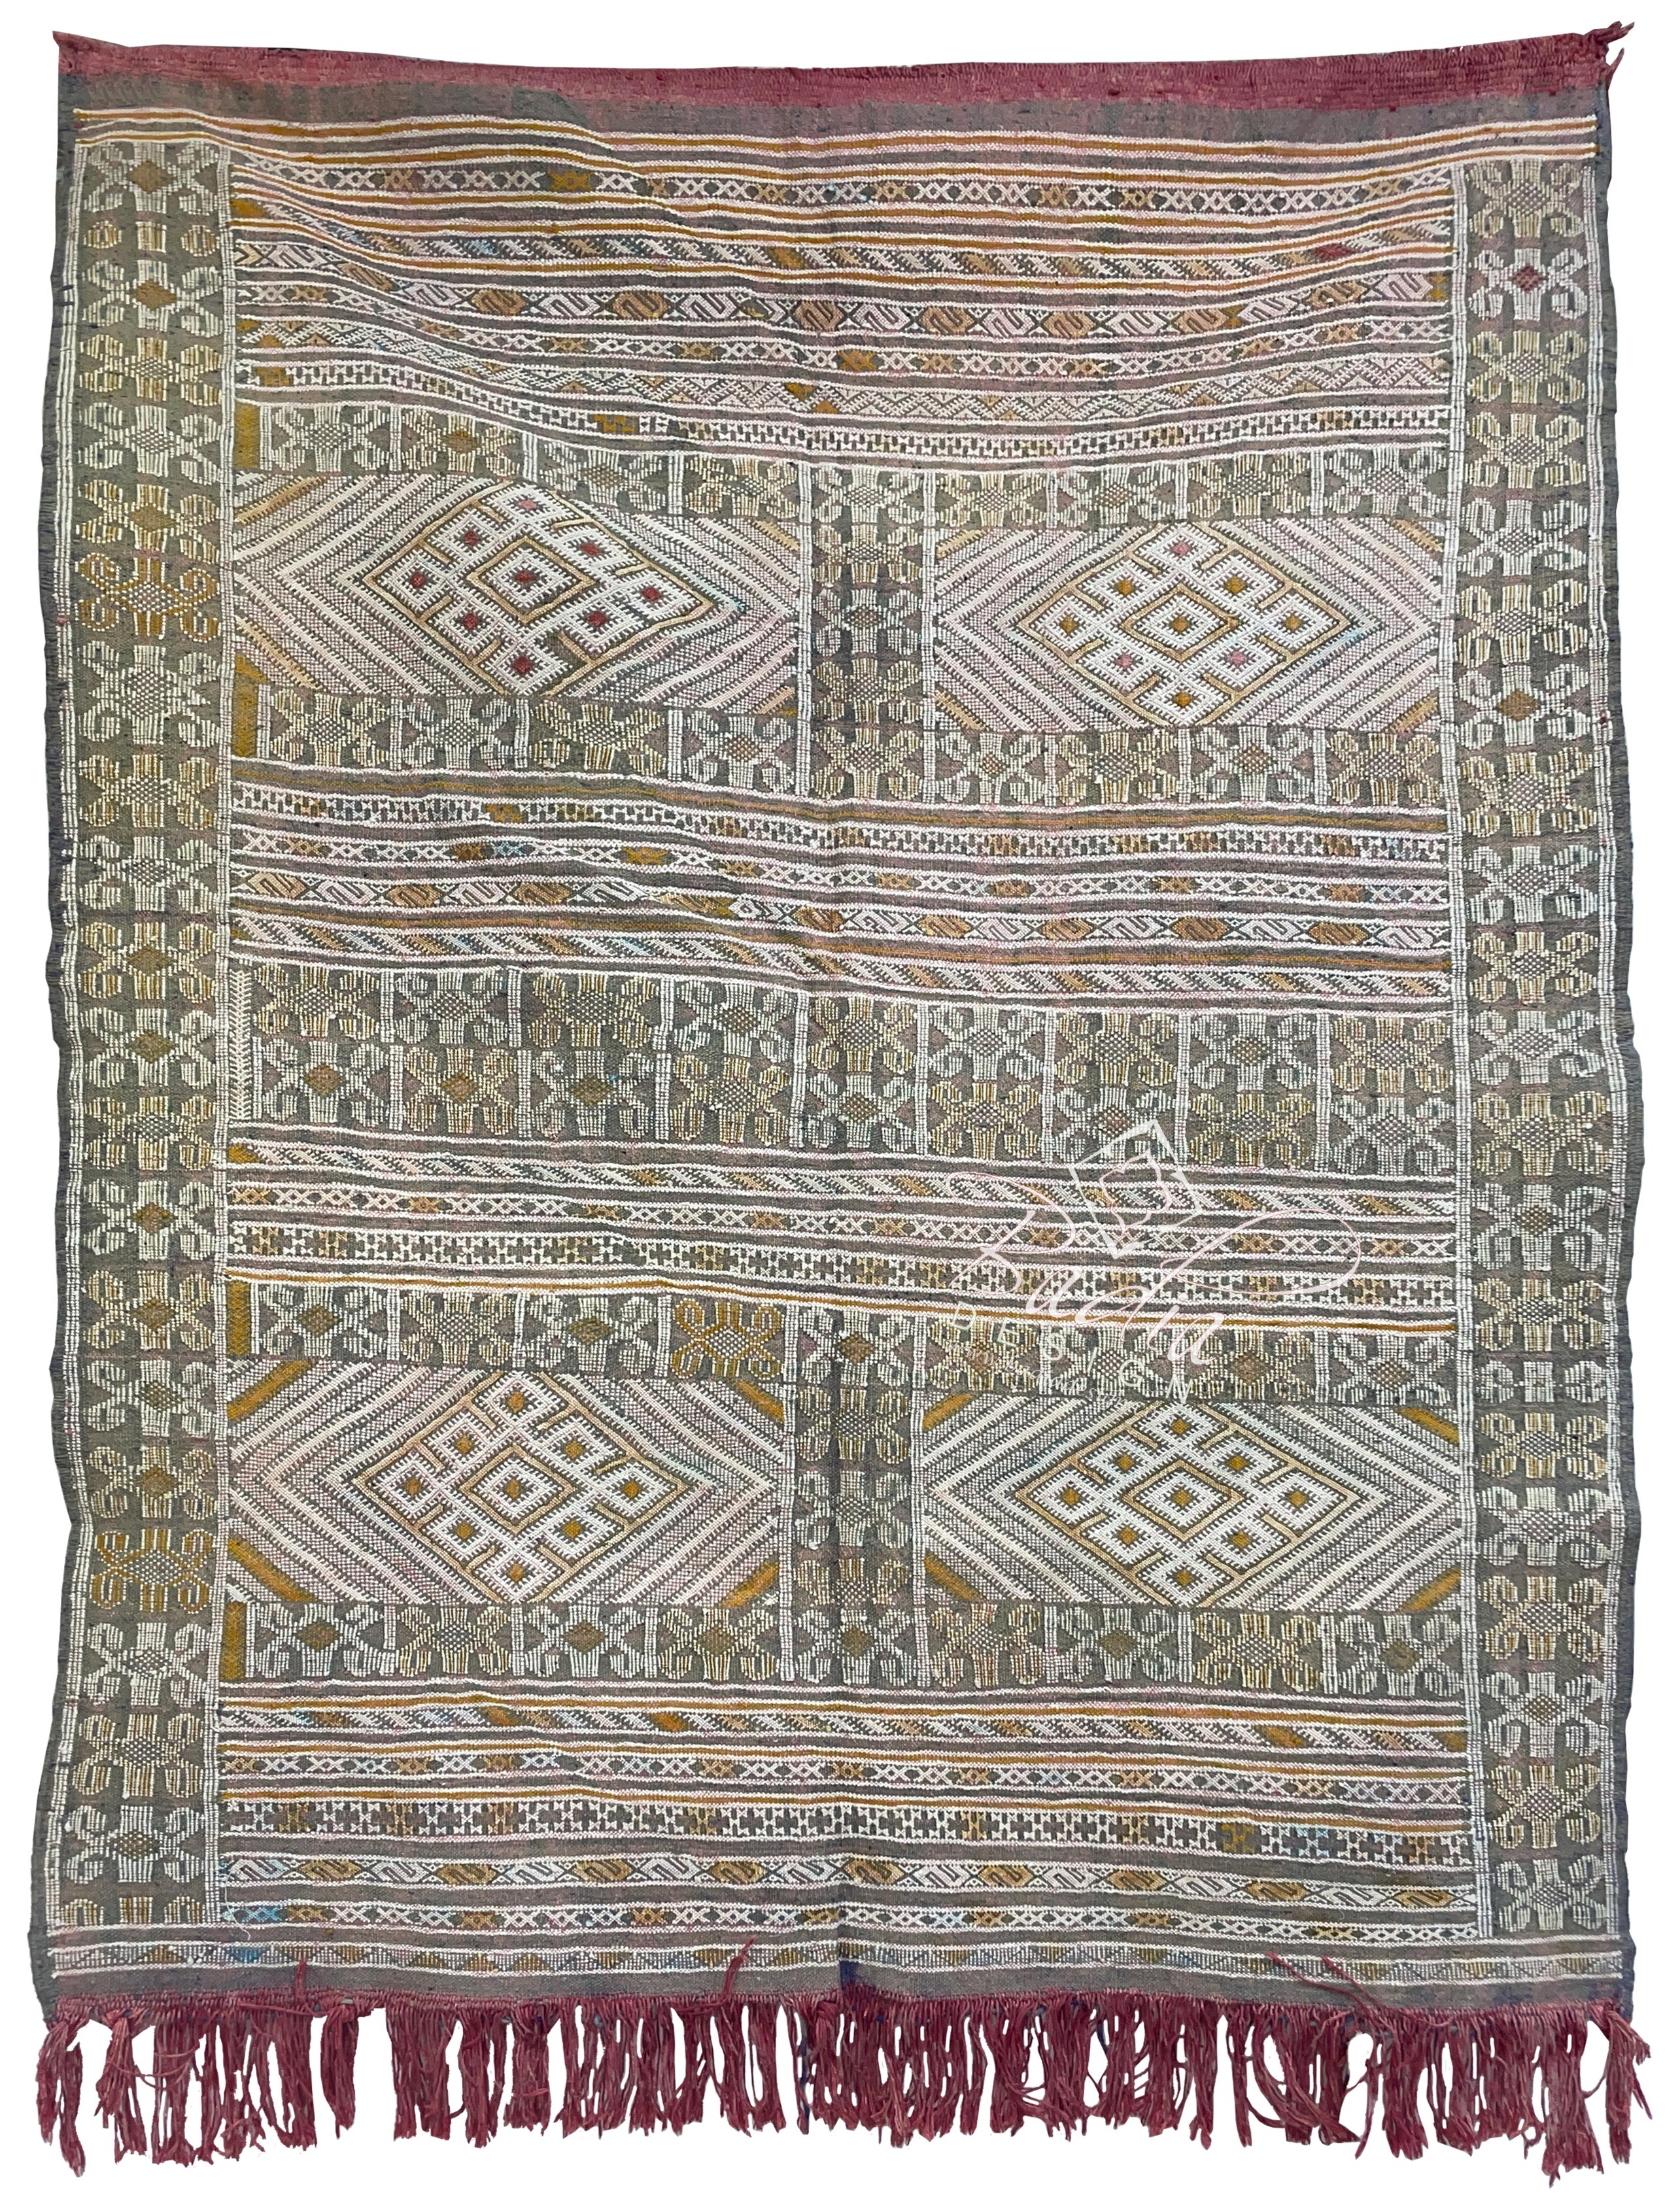 affordable-moroccan-kilim-rugs-r0180.jpg